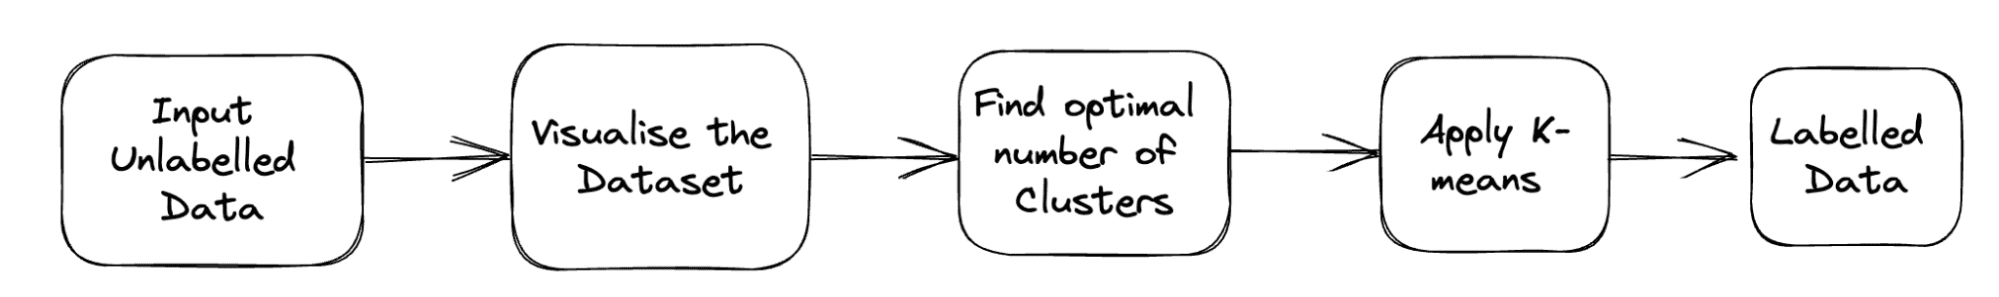 Clustering Unleashed: Understanding K-Means Clustering